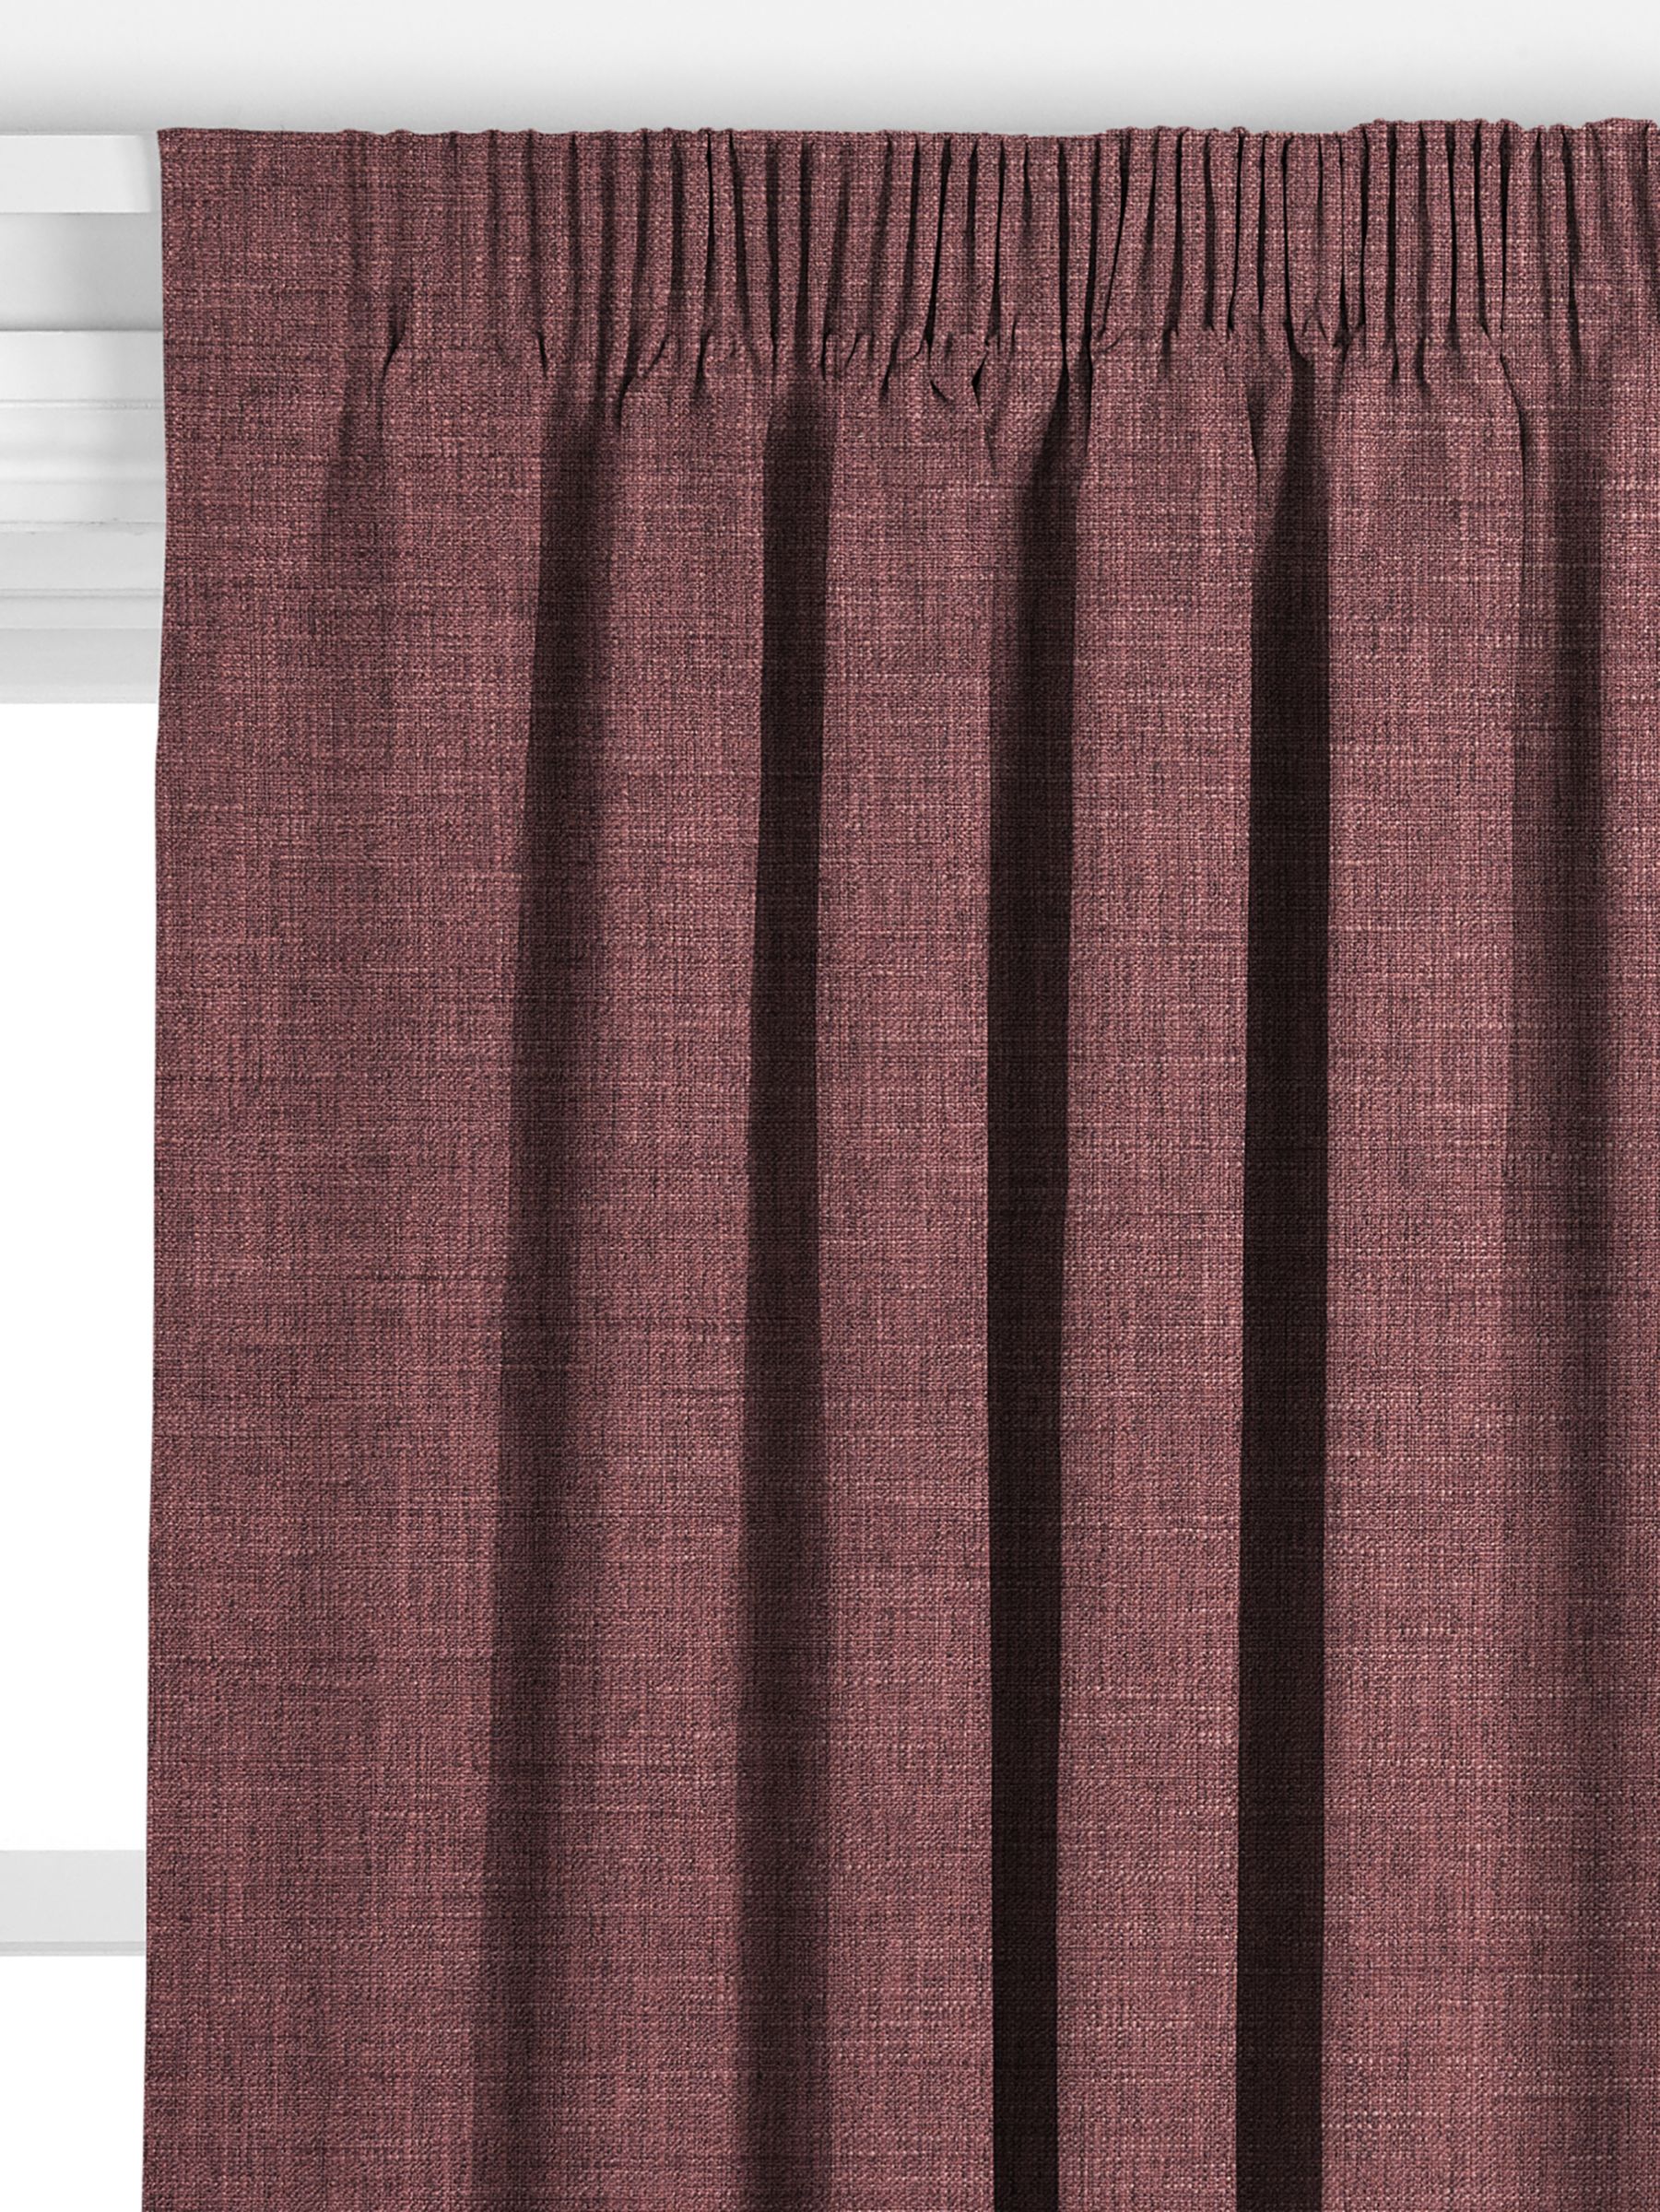 John Lewis Tonal Weave Made to Measure Curtains, Damson